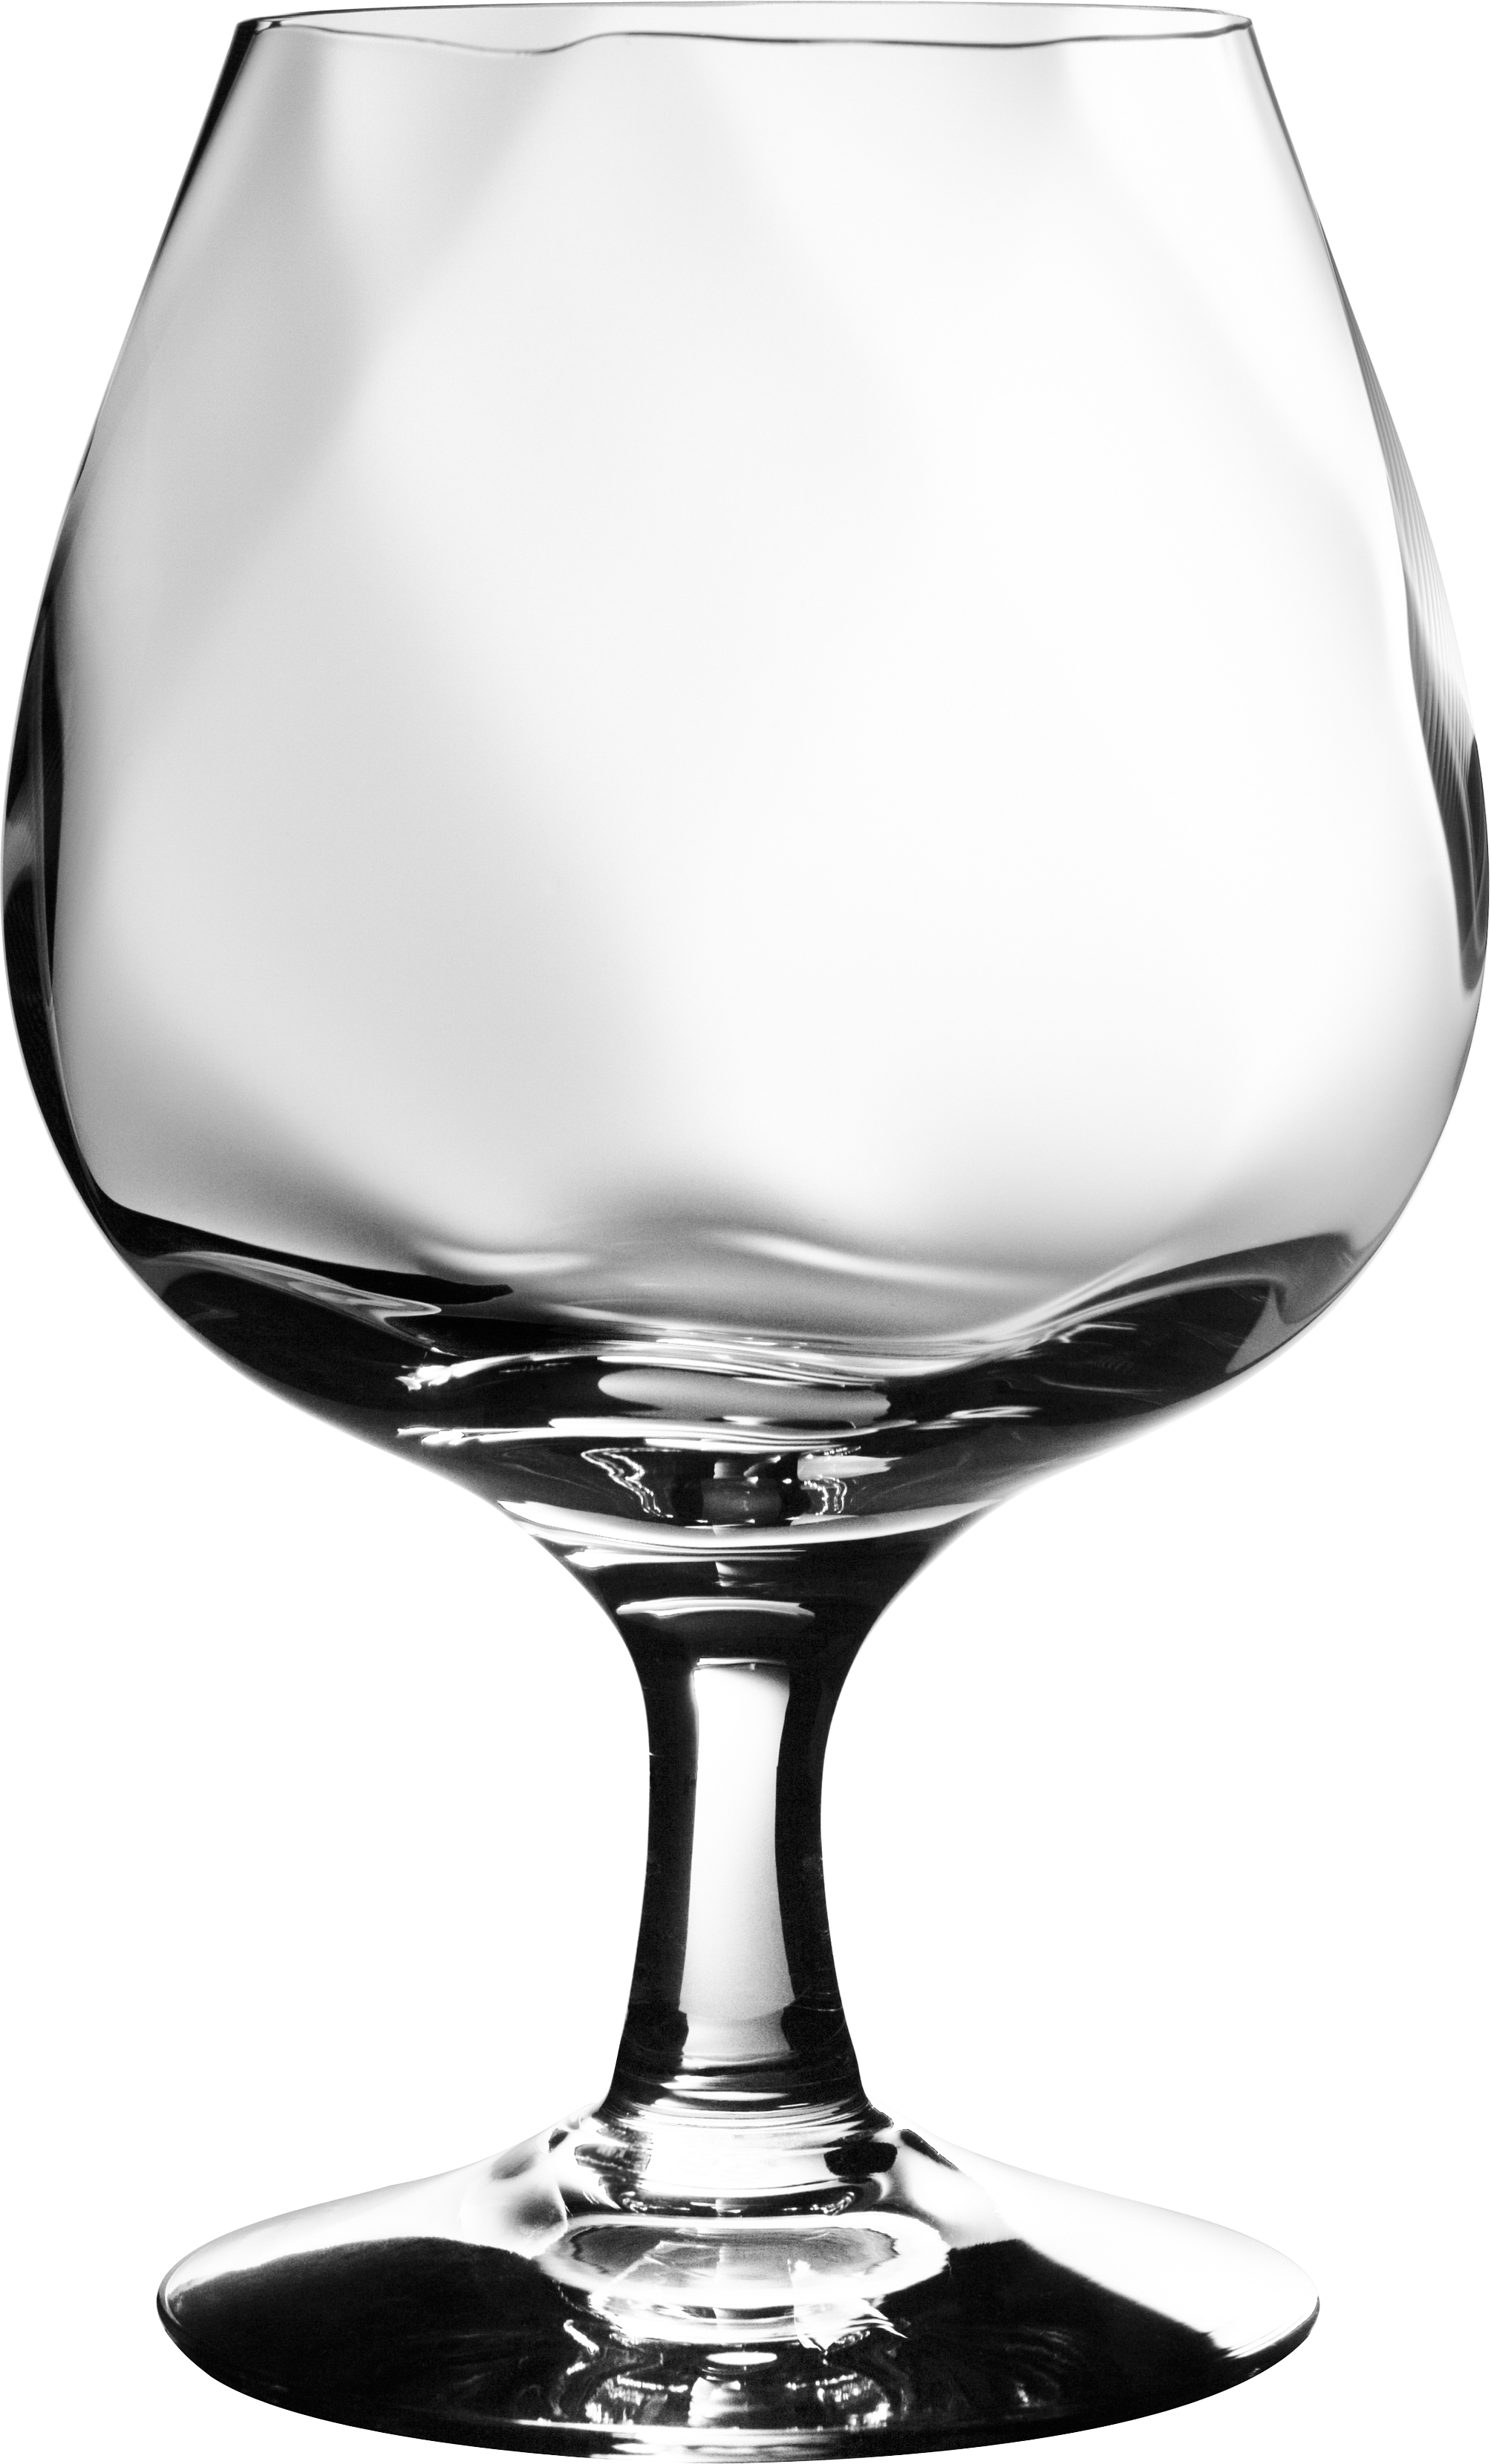 Download Drinking Glass Transparent Image HQ PNG Image | FreePNGImg